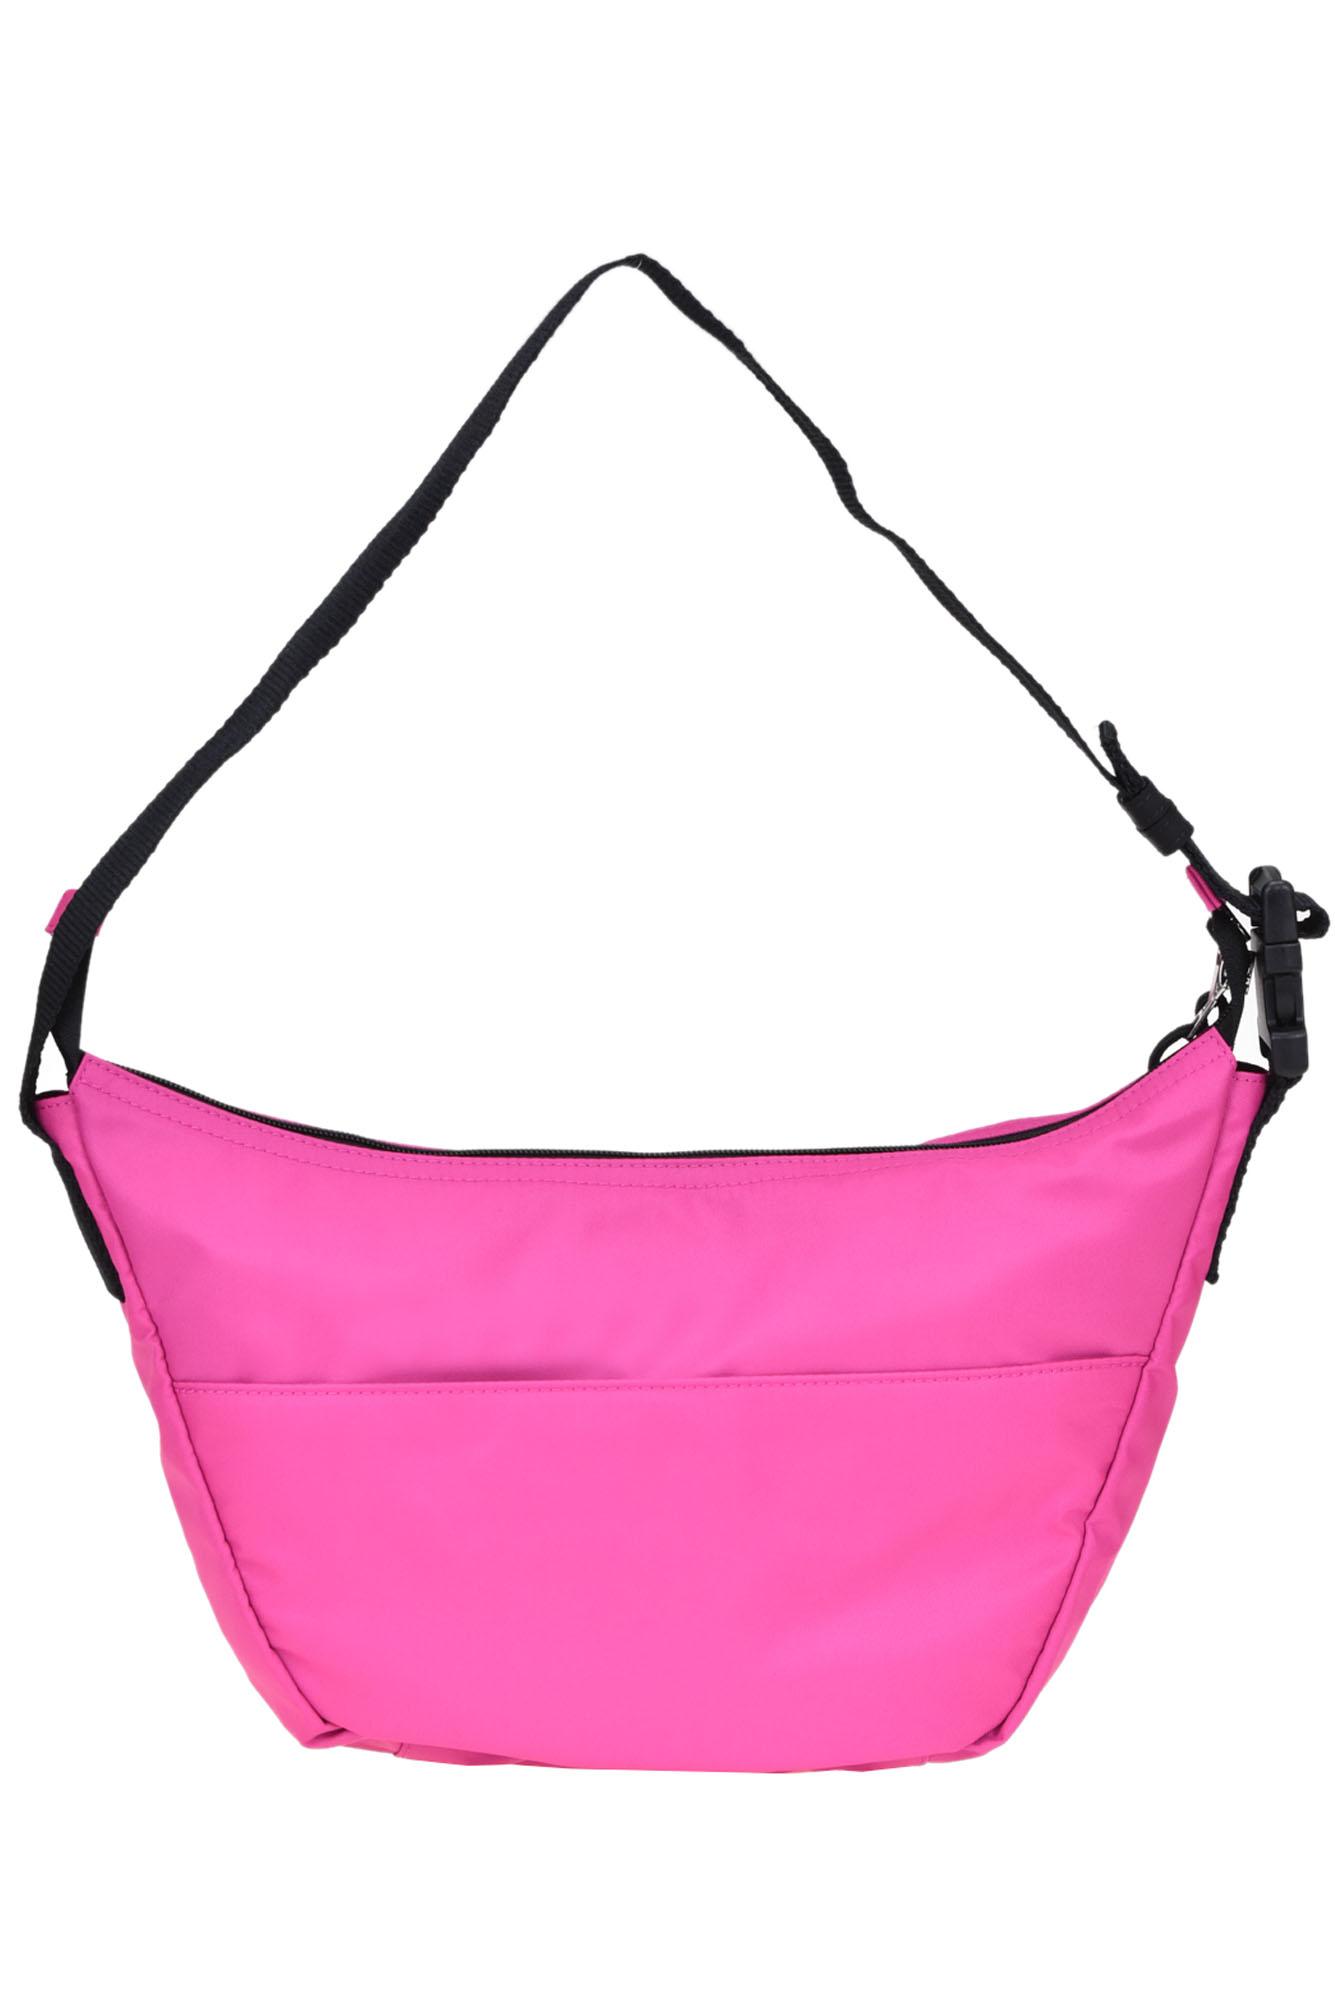 Balenciaga Wheel Sling In Nylon Bag in Pink | Lyst